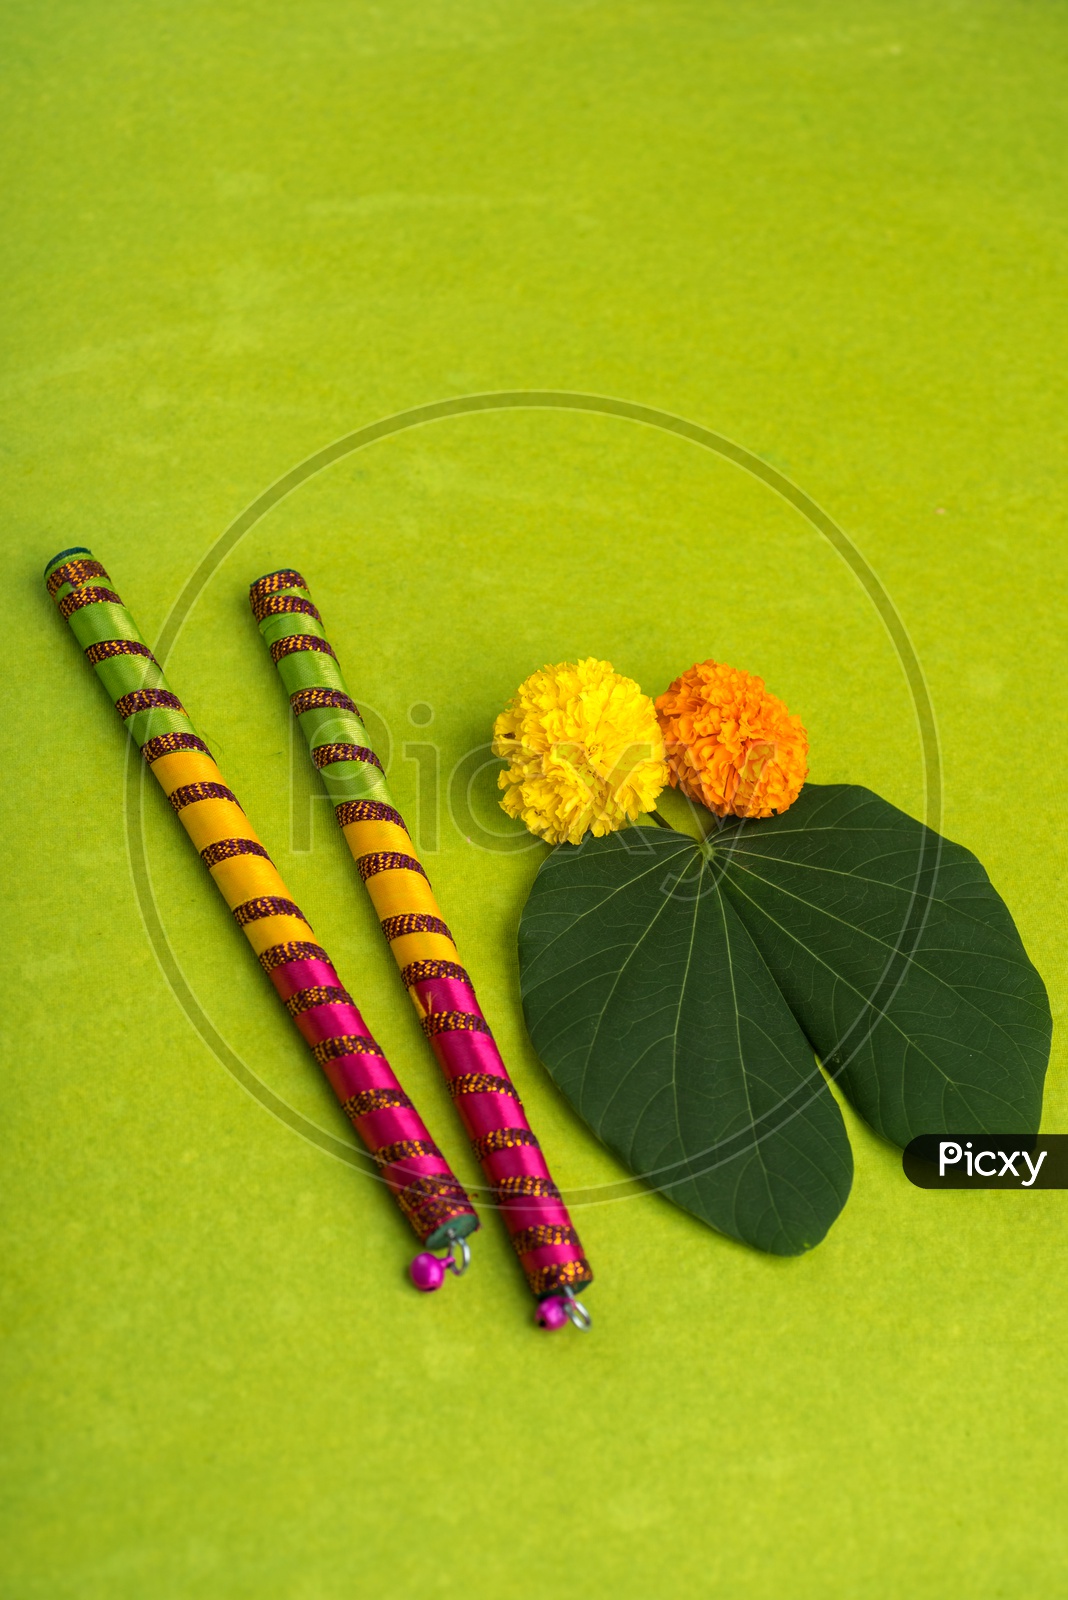 Indian Festival Dussera or Navrathri Symbolic Representation With Dandiya Sticks , Mari Gold Flowers And Golden Leaf ( Bauhinia Racemosa ) on an Isolated Background